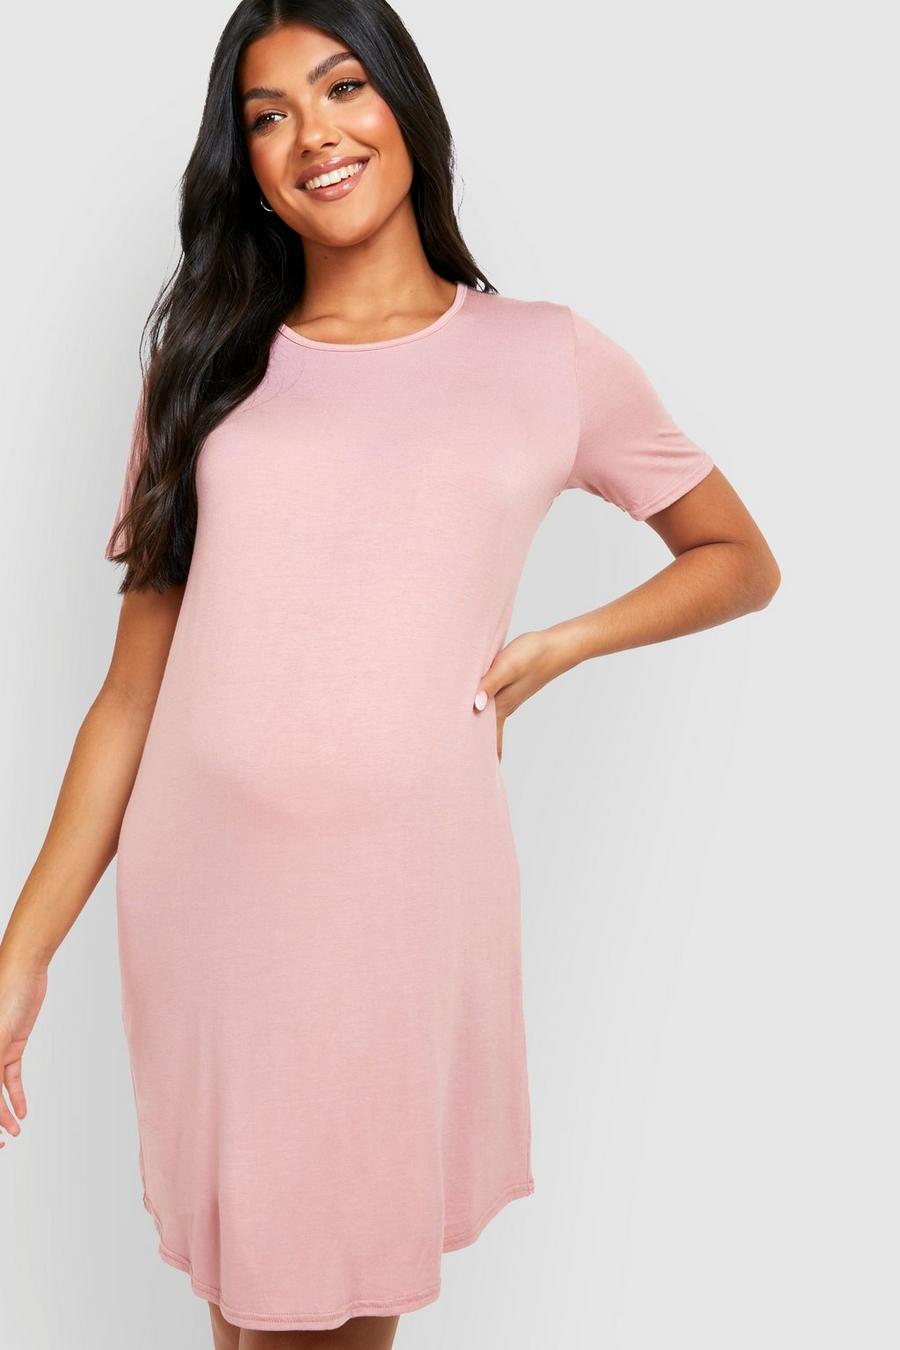 Rose pink Maternity Basic T-shirt Nightie